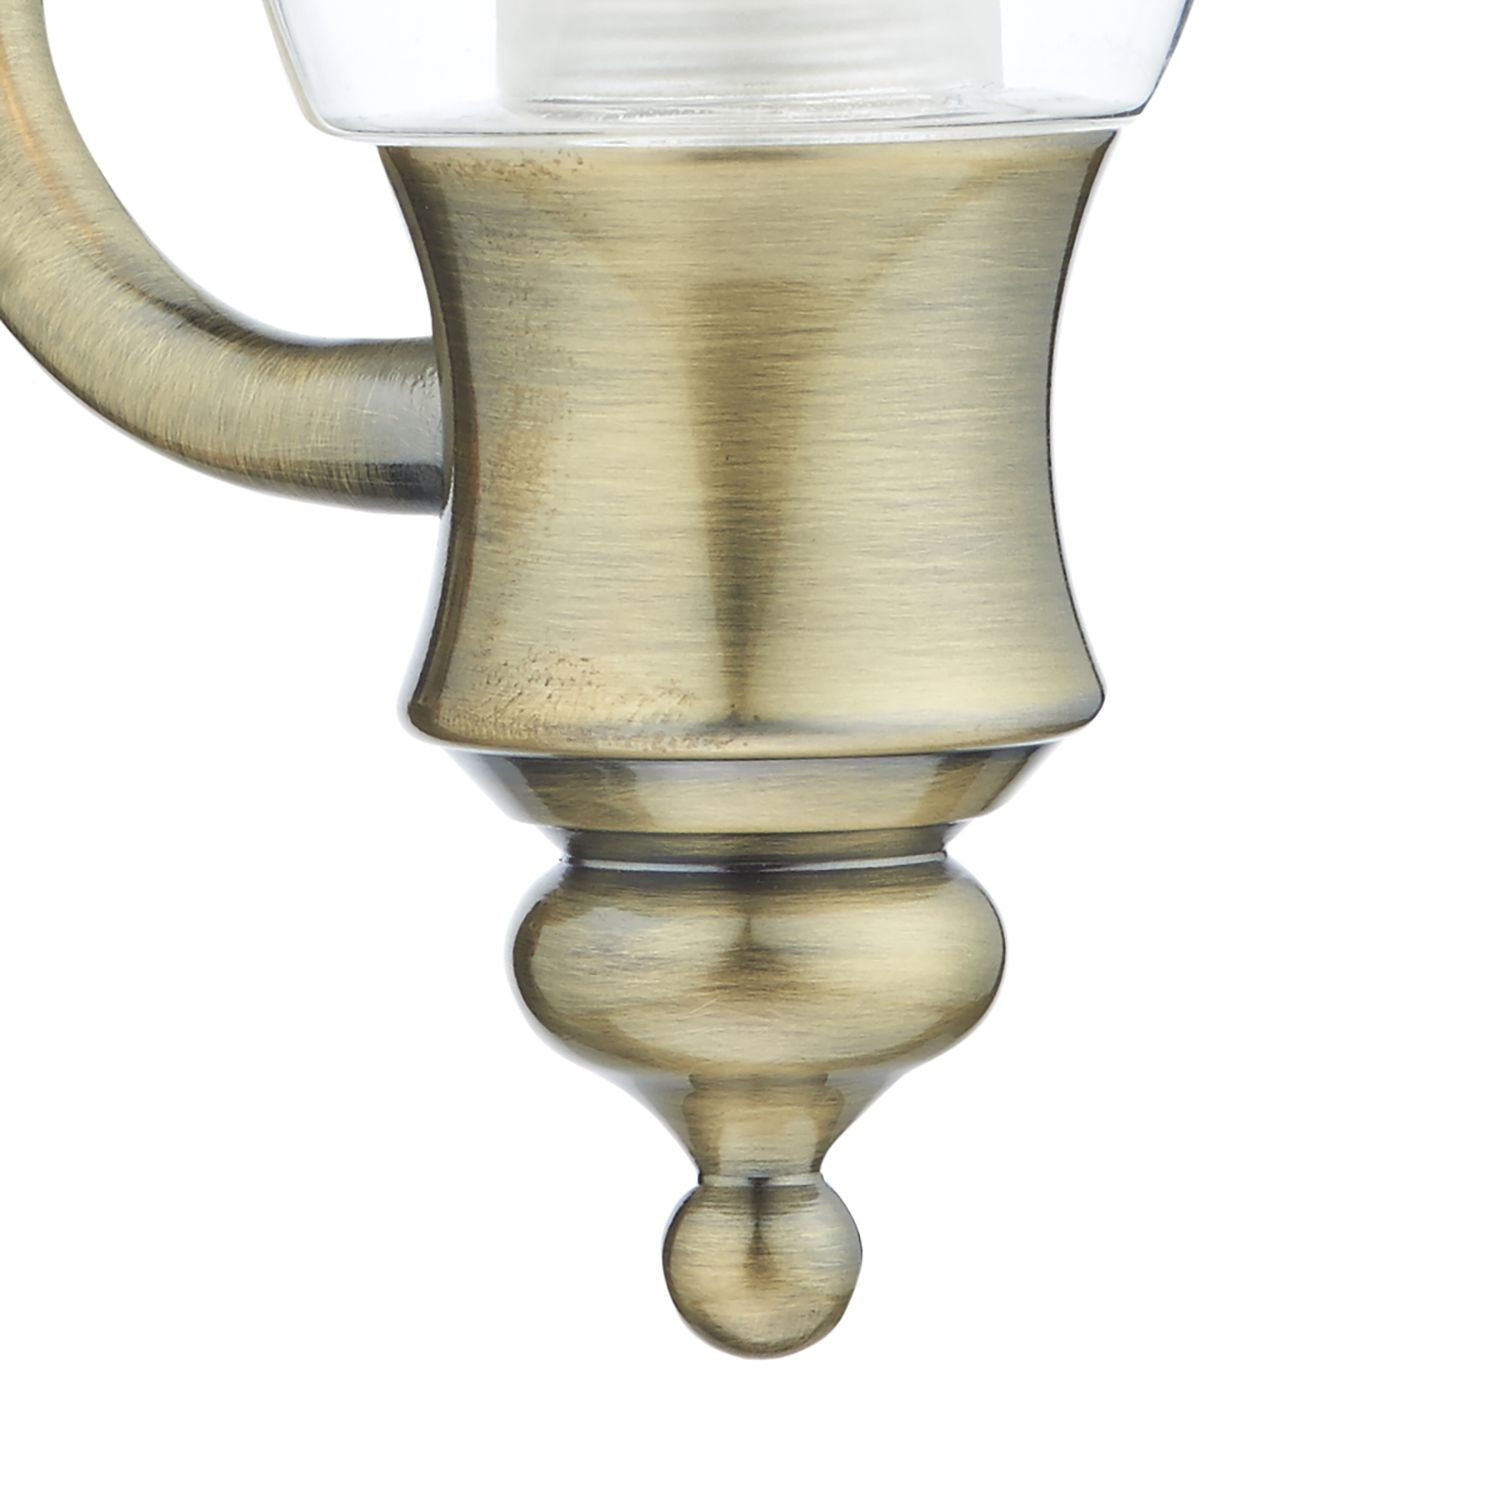 Vestry Bathroom Wall Light Antique Brass/Polished Chrome IP44